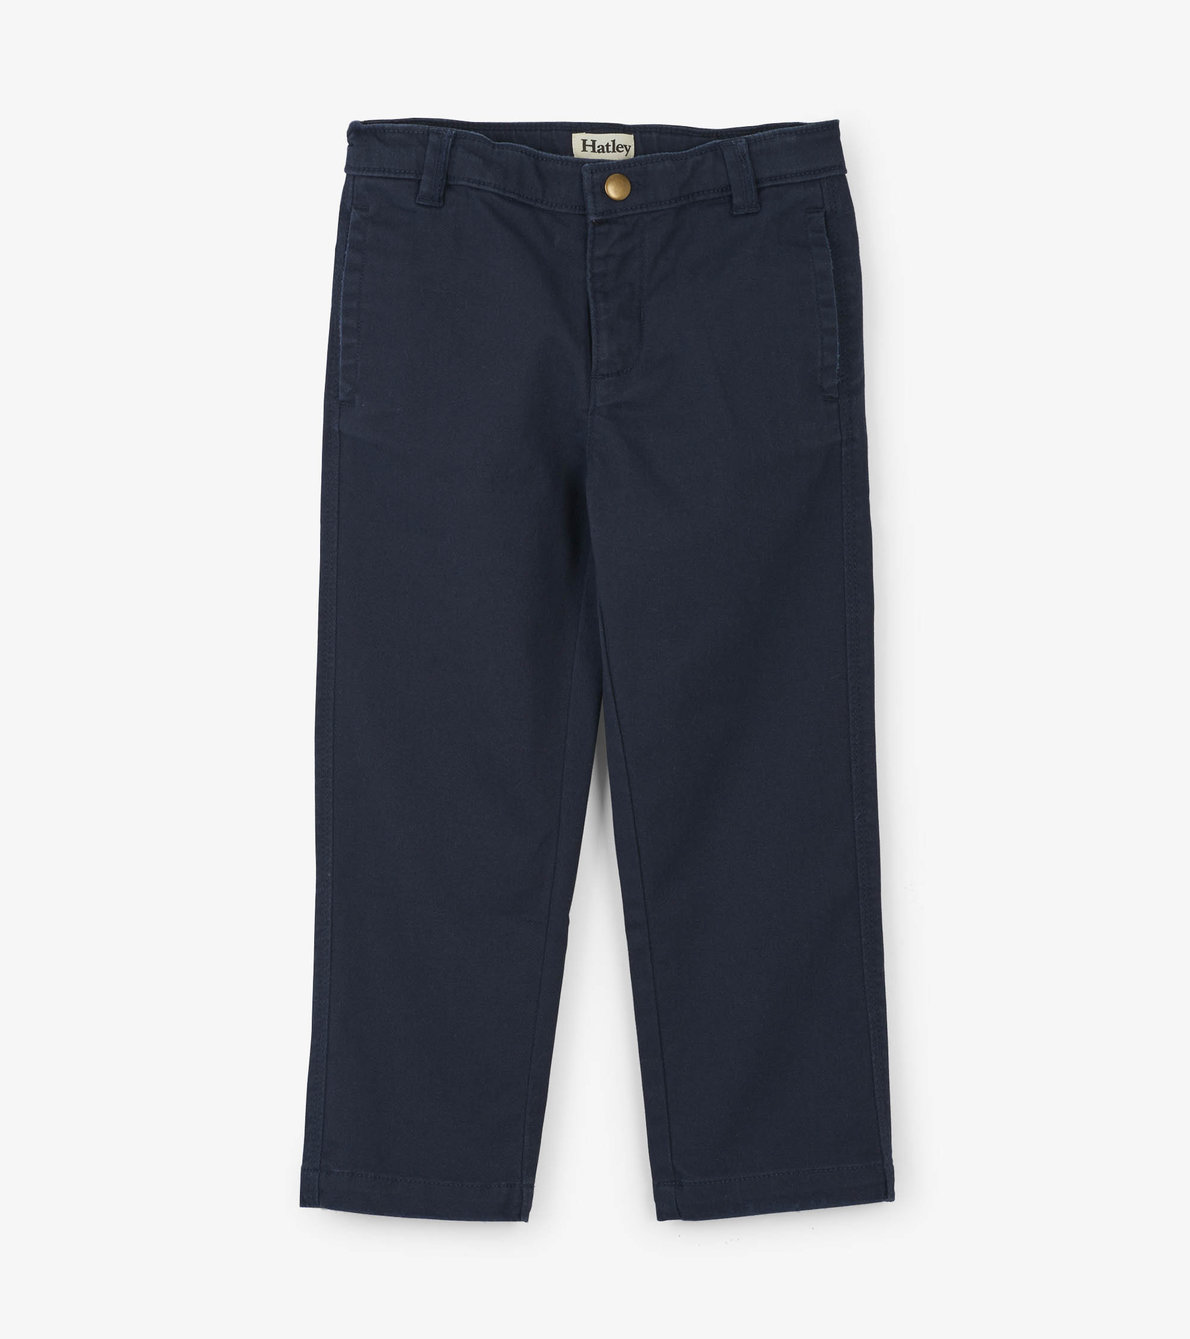 Agrandir l'image de Pantalon en sergé – Bleu marine